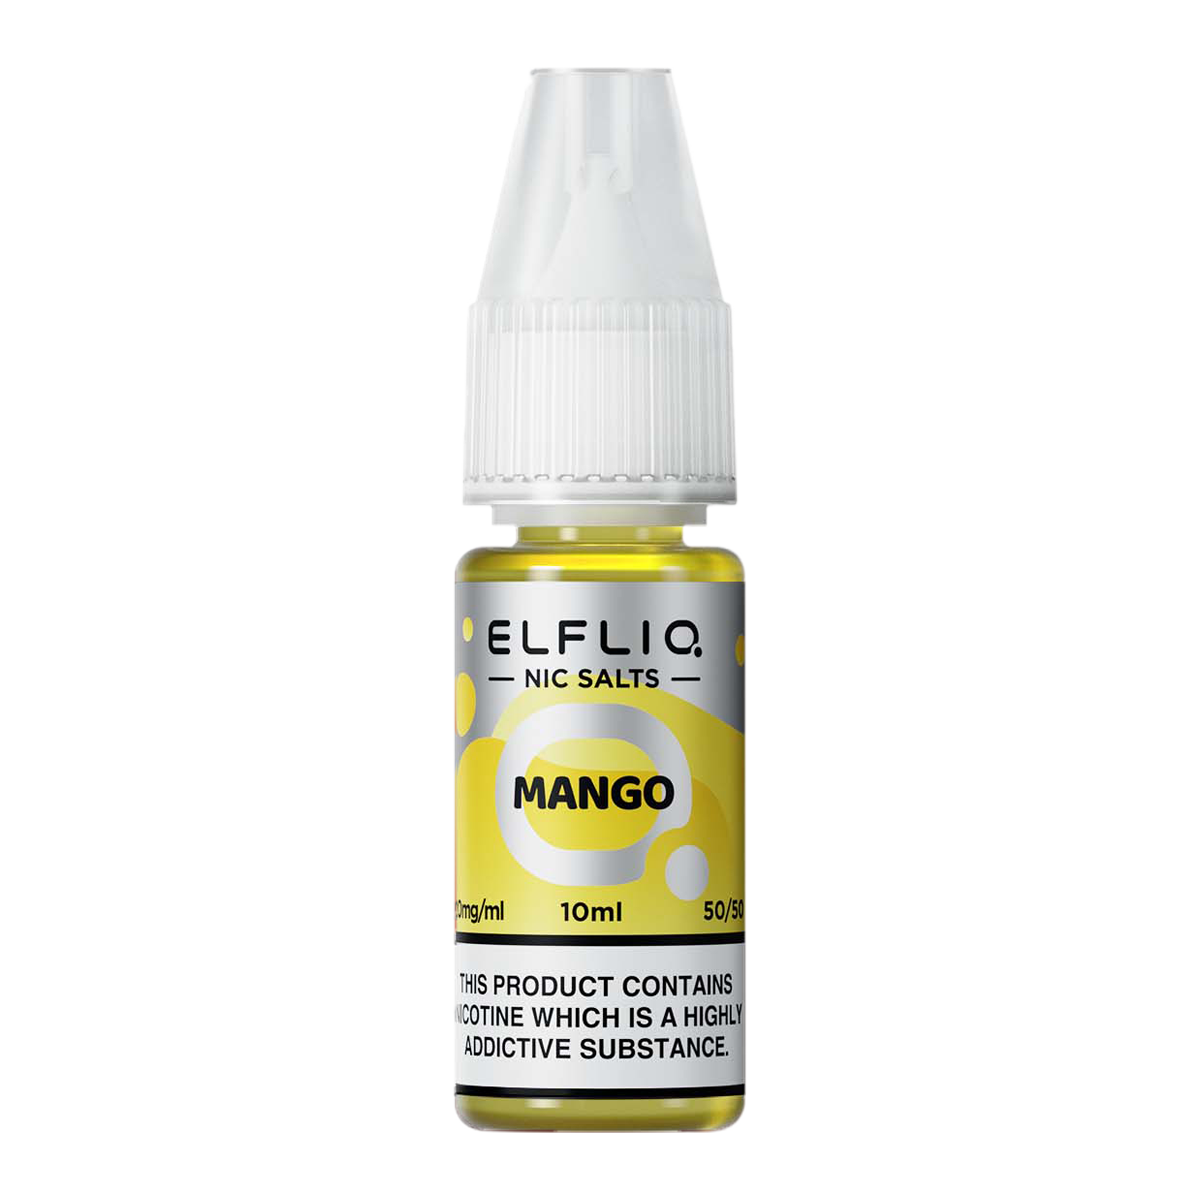 Elf Bar Elfliq - Mango 10ml Nic Salts - The Ace Of Vapez